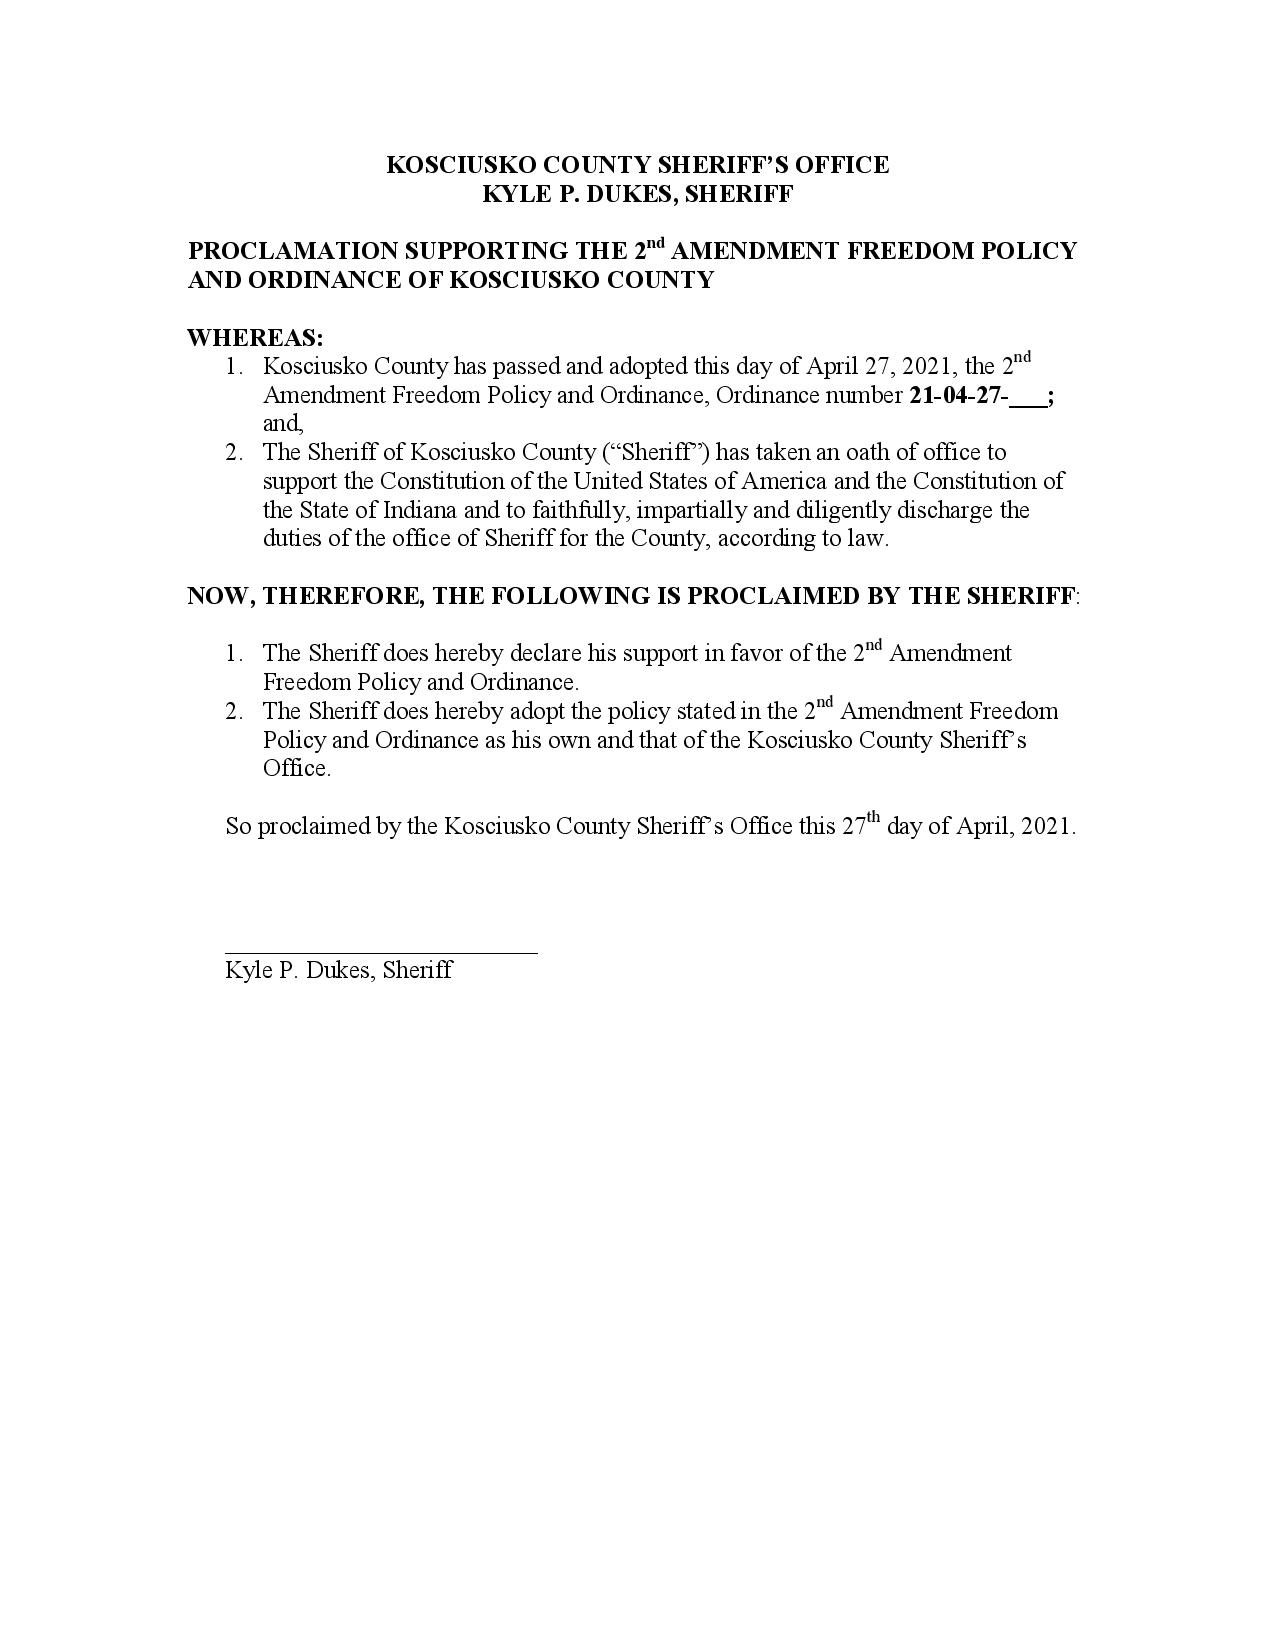 Kosciusko County Sheriff's Office Proclamation Supporting the 2nd Amendment Freedom Policy and Ordinance of Kosciusko County